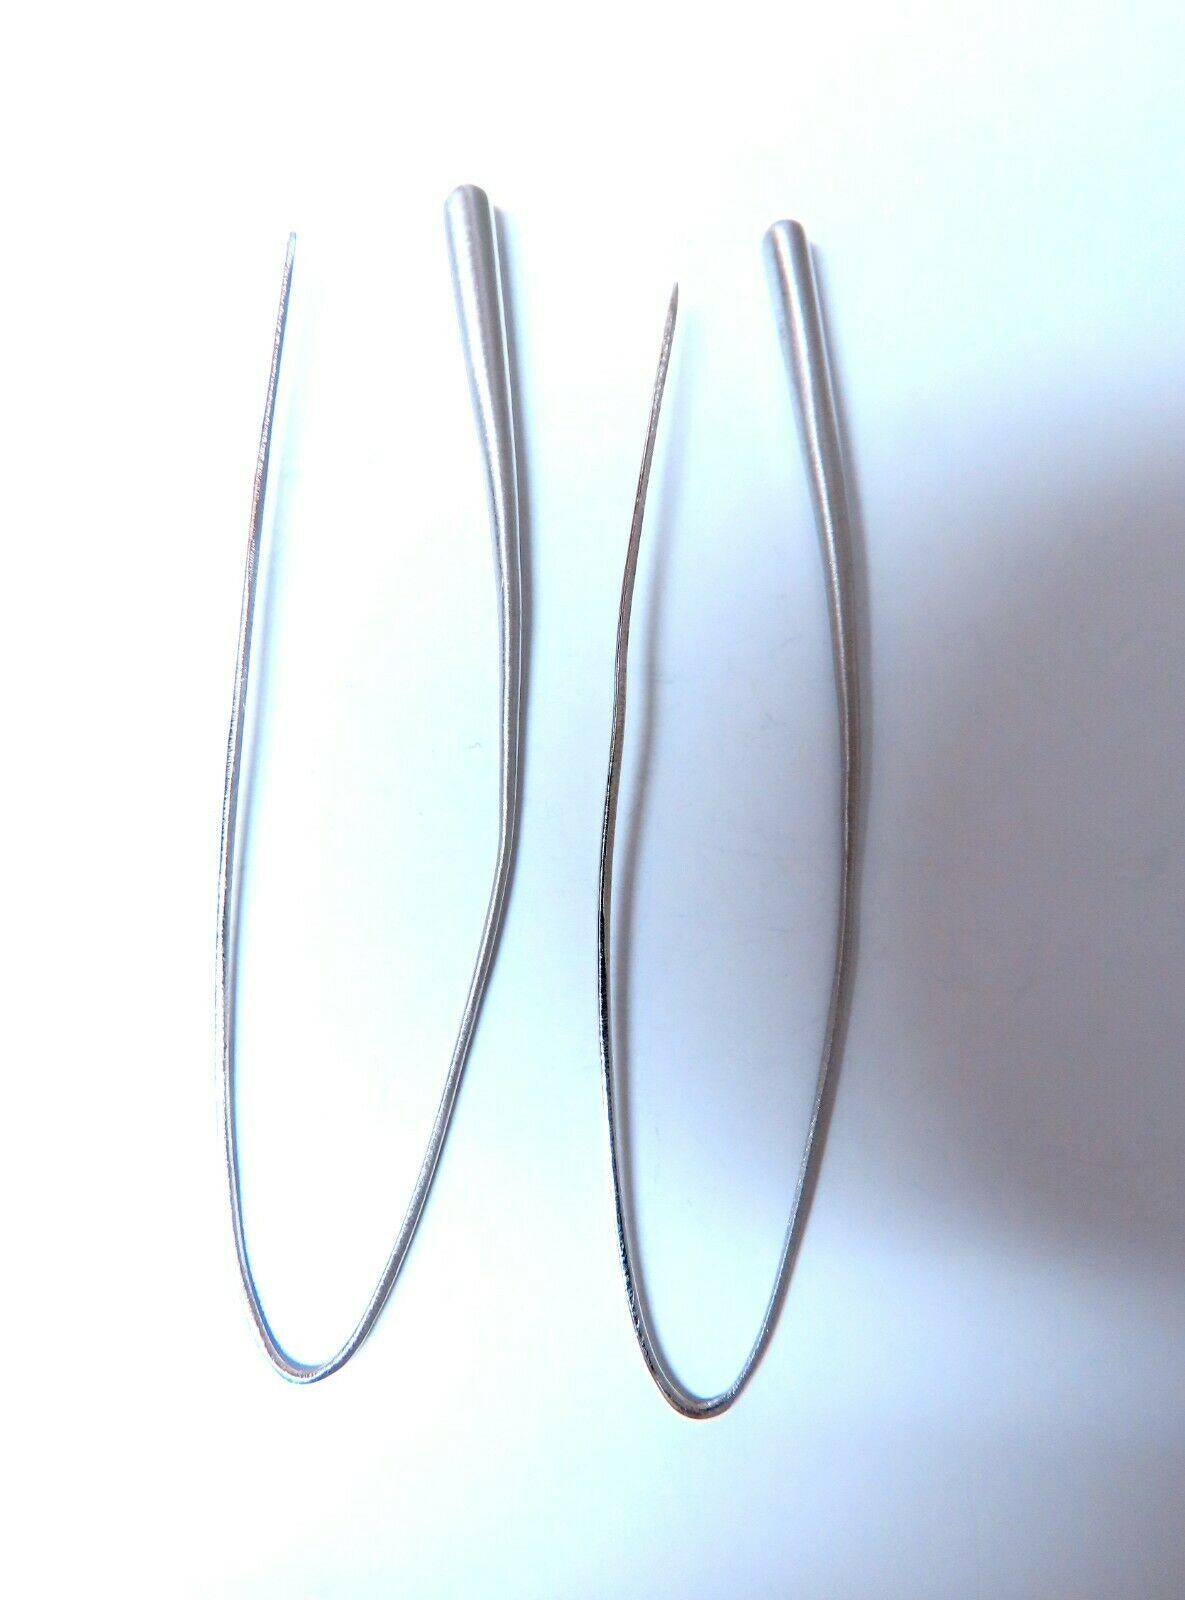 Gothic Tubular Lobe Slip Wire Earrings

Measurements of Earrings:

3.1 inch long 

6.9 grams / 14kt. white gold

Earrings are gorgeous & Handmade